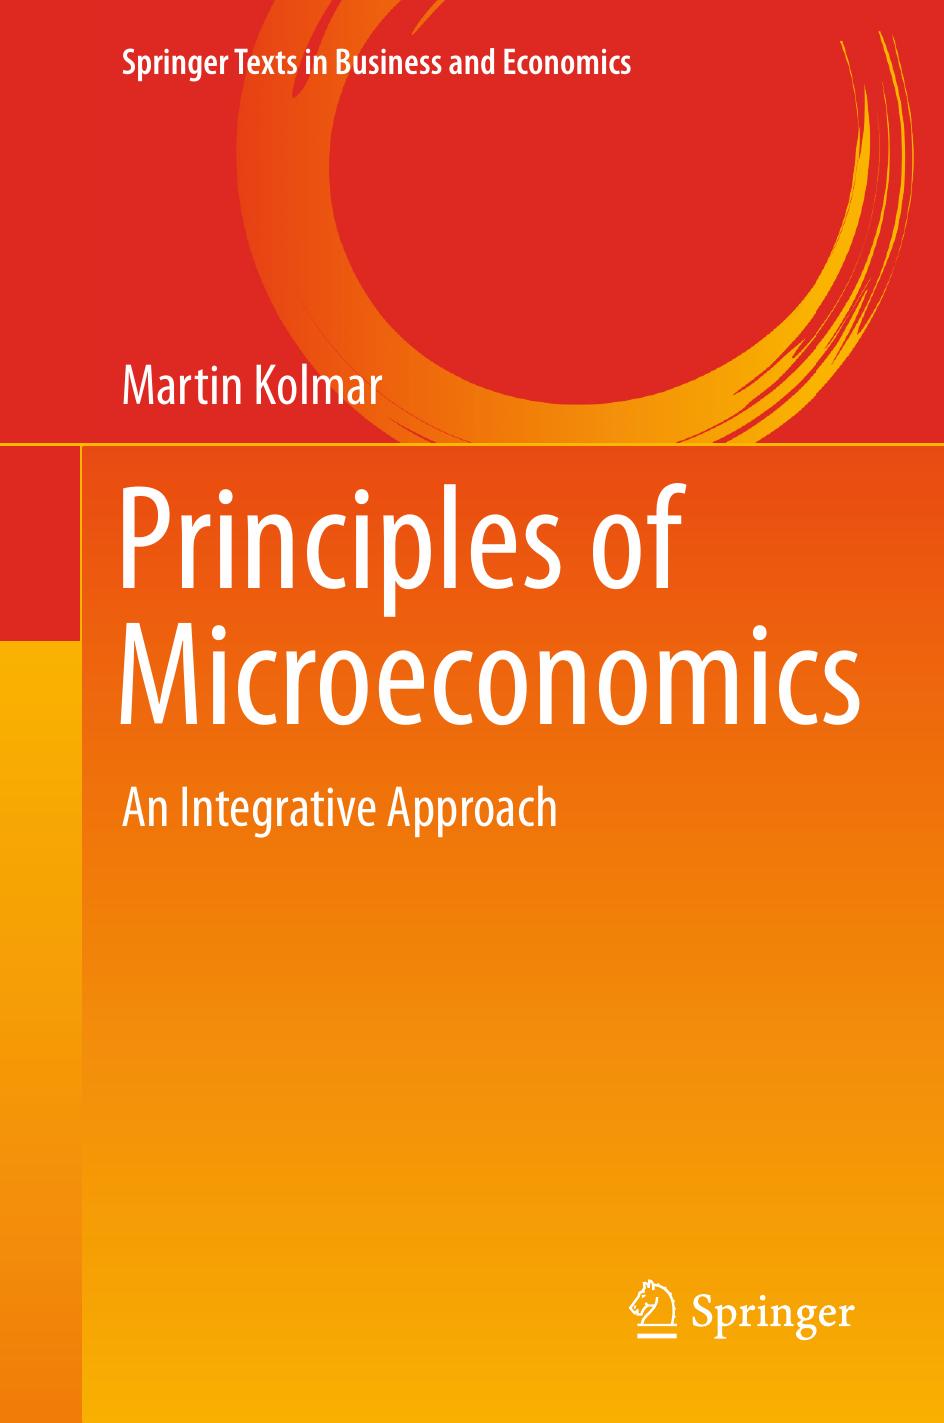 Principles of Microeconomics by Martin Kolmar